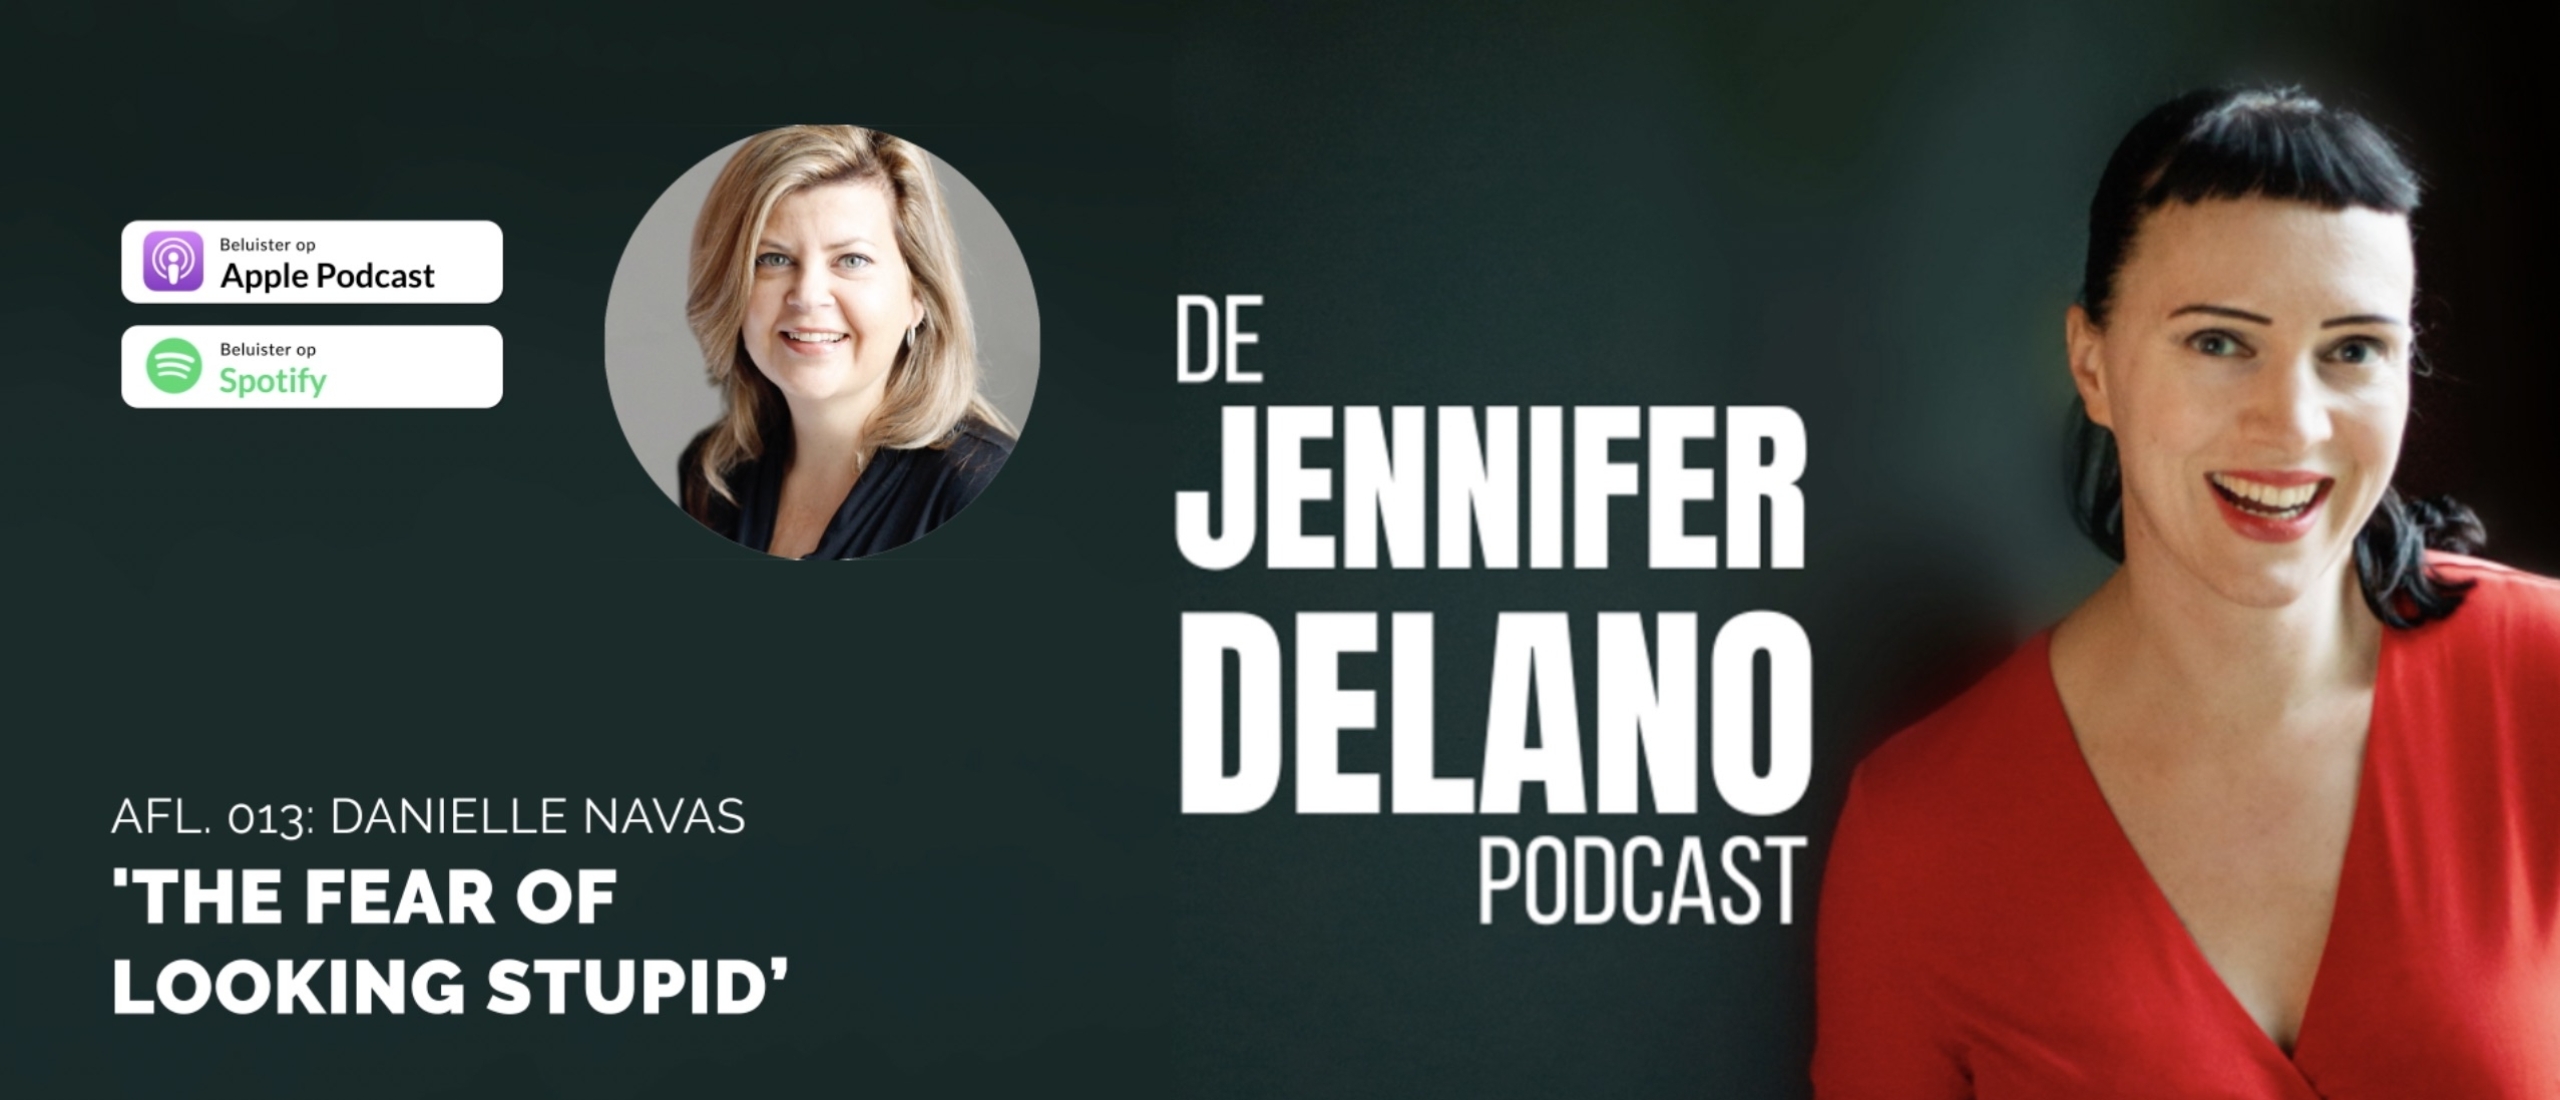 ‘The fear of looking stupid’ - De Jennifer Delano Podcast Afl. 013 met Danielle Navas